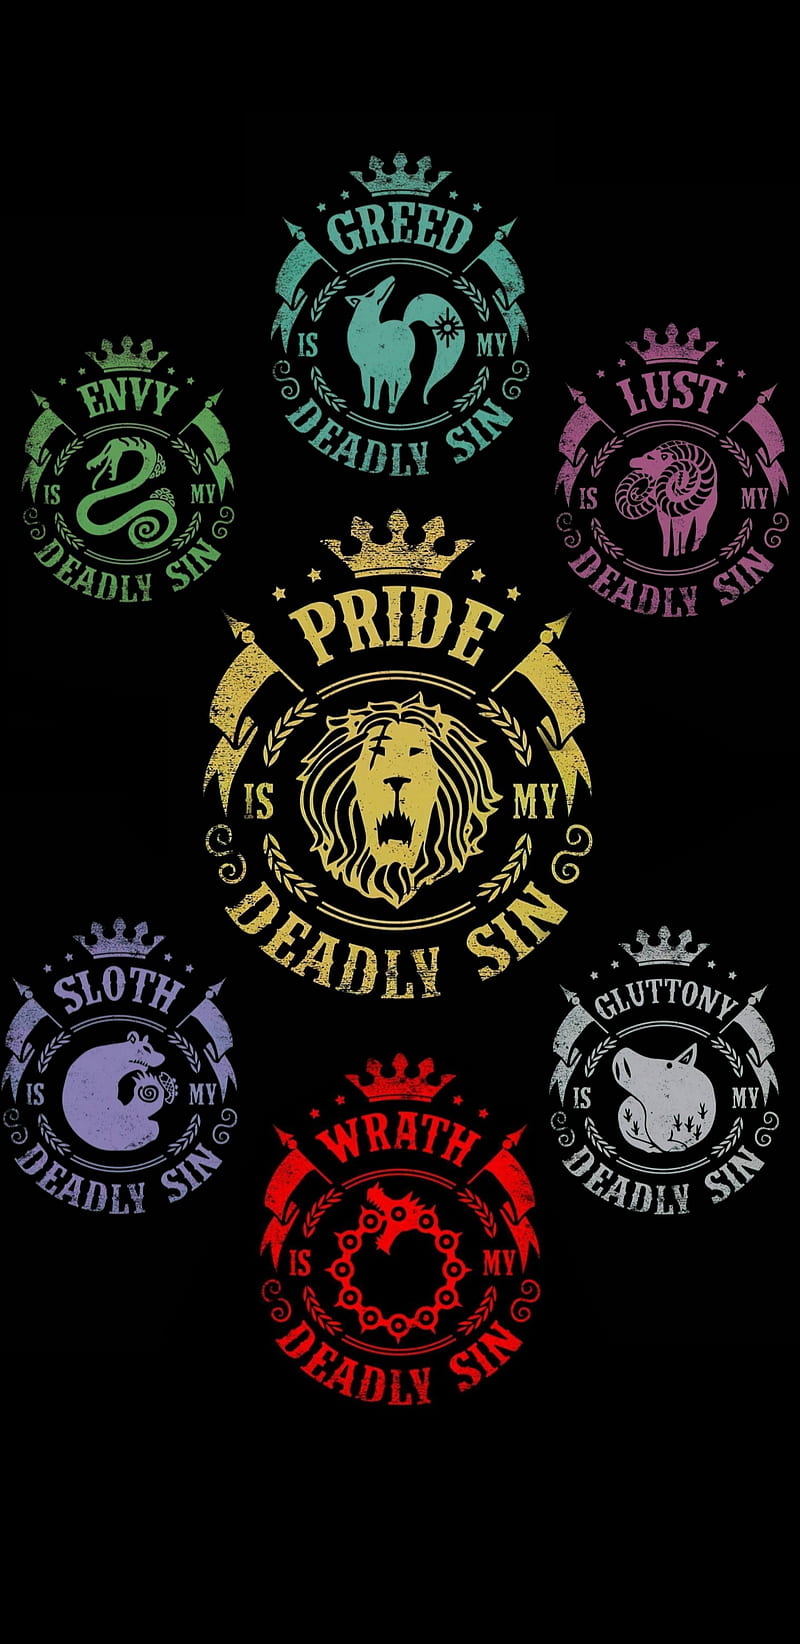 Seven deadly sins, envy, gluttony, greed, pride, sloth, wrath, HD phone wallpaper